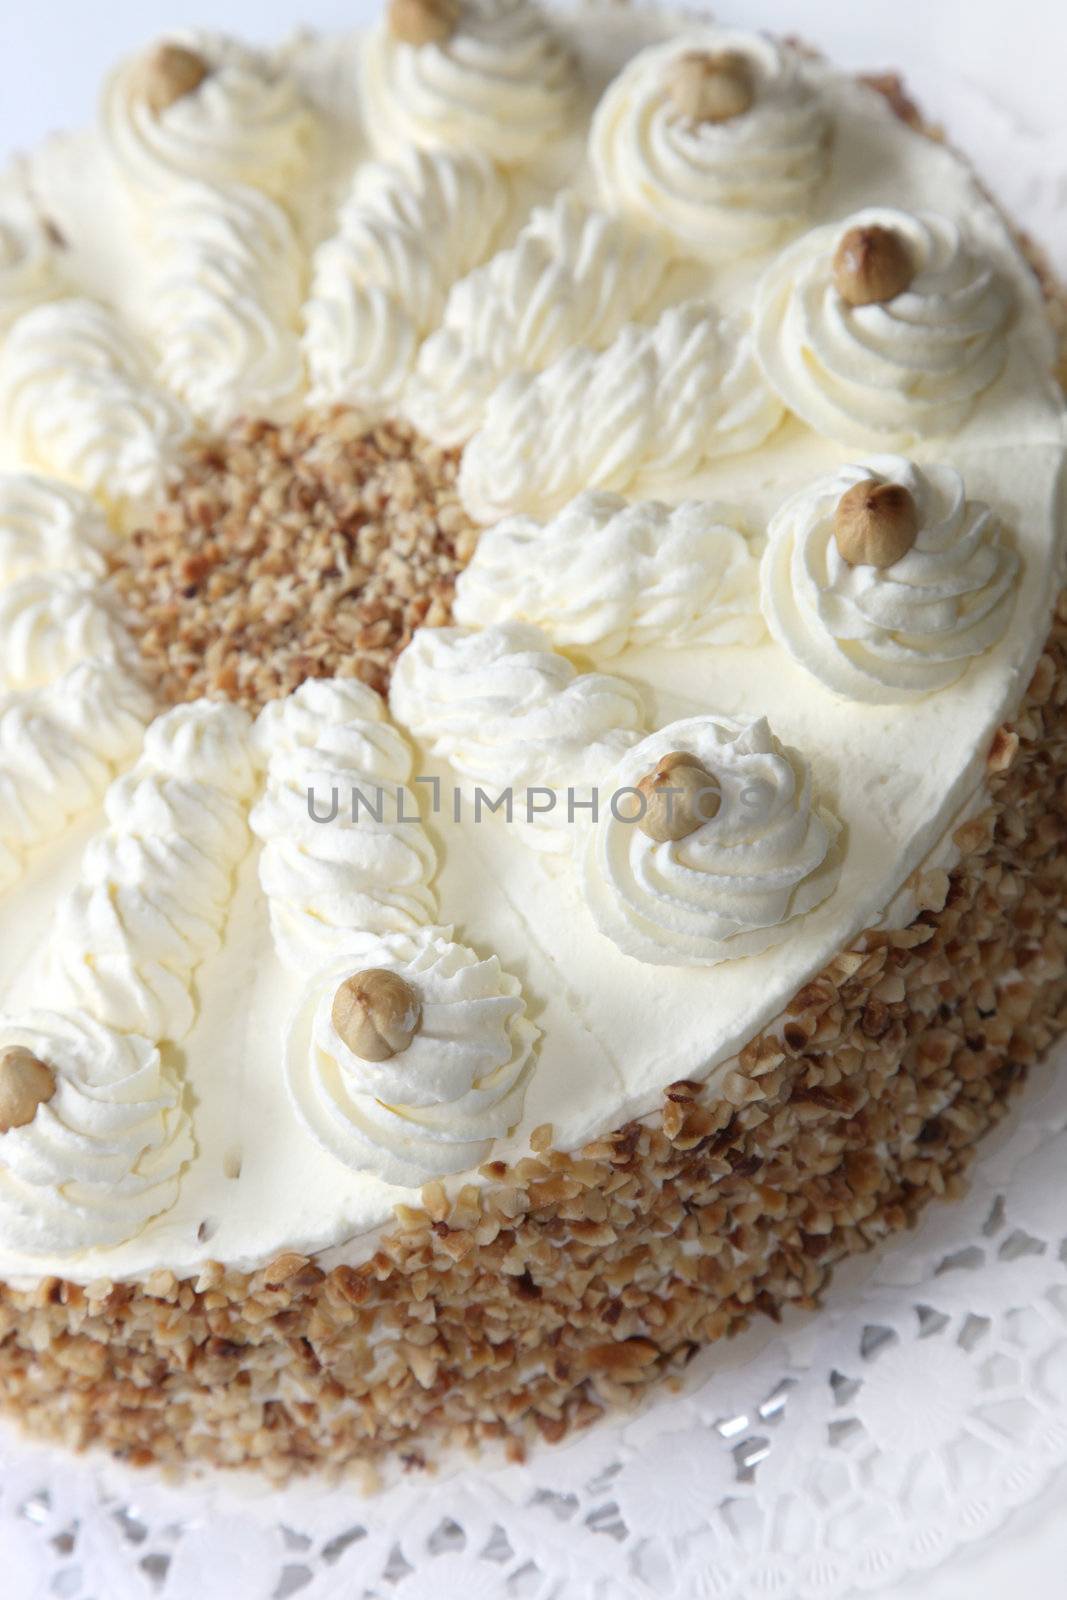 Cream cake with almond edge by Farina6000